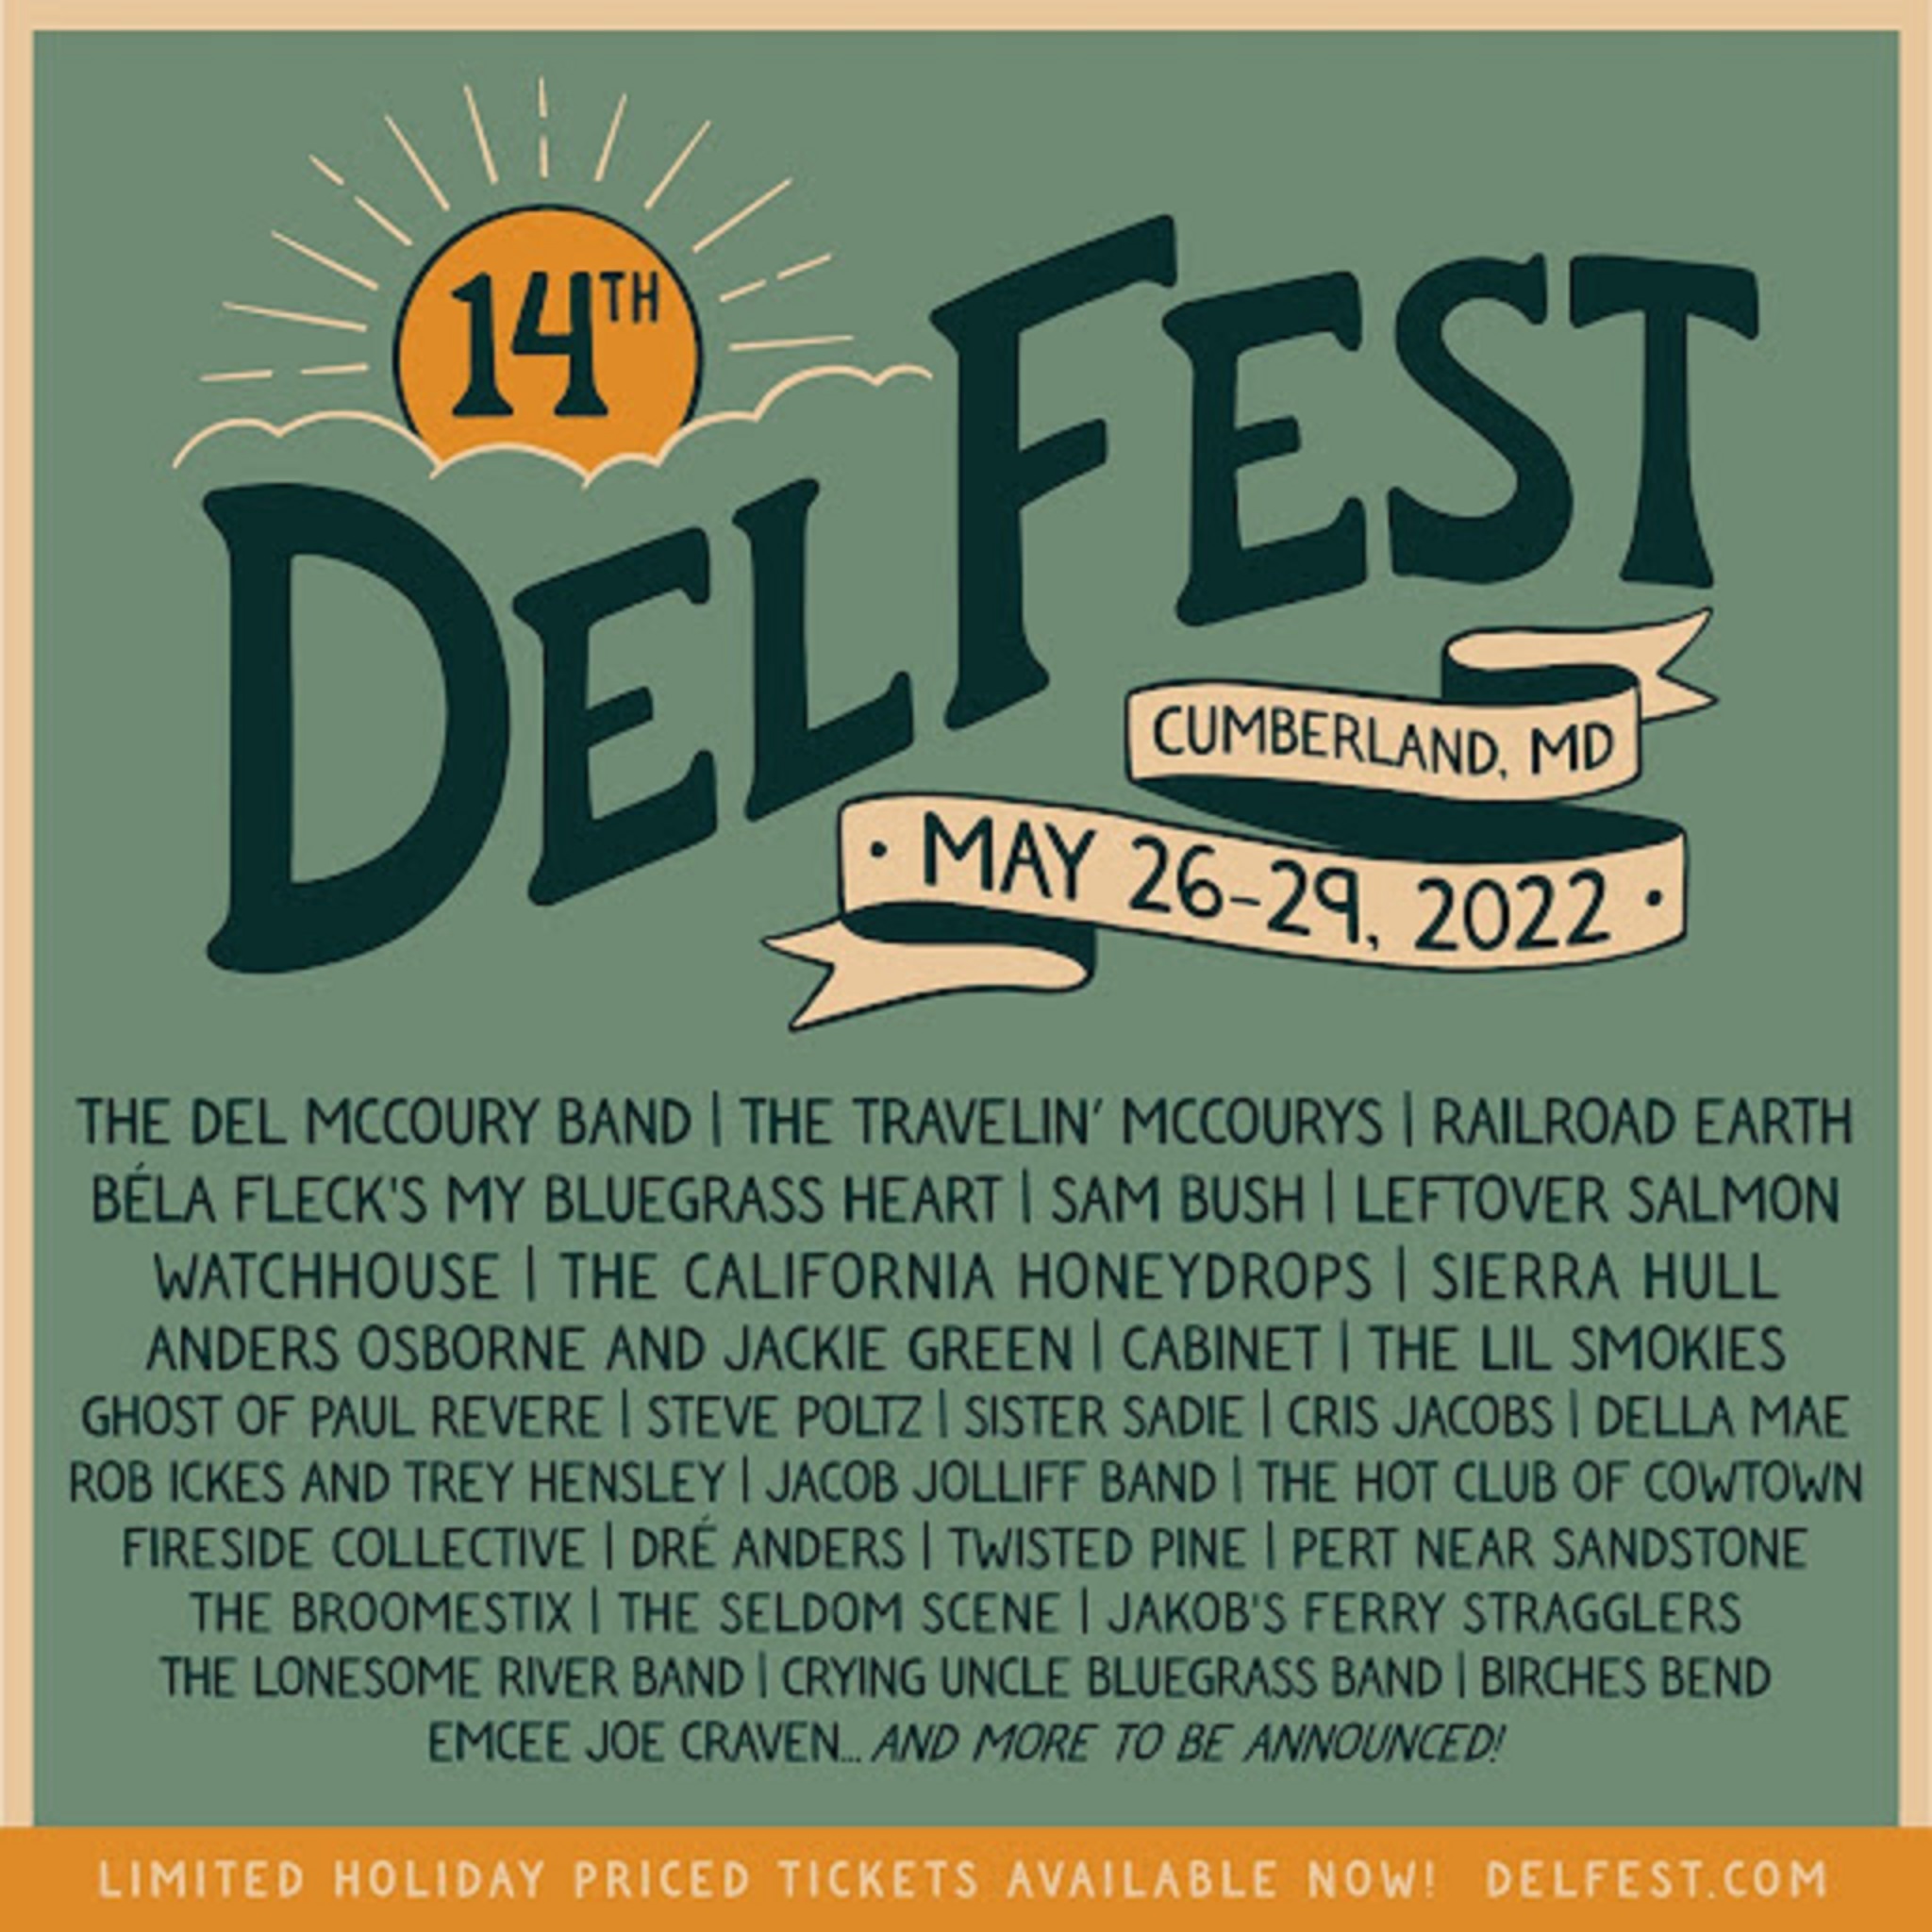 DelFest announces triumphant return of 14th annual festival